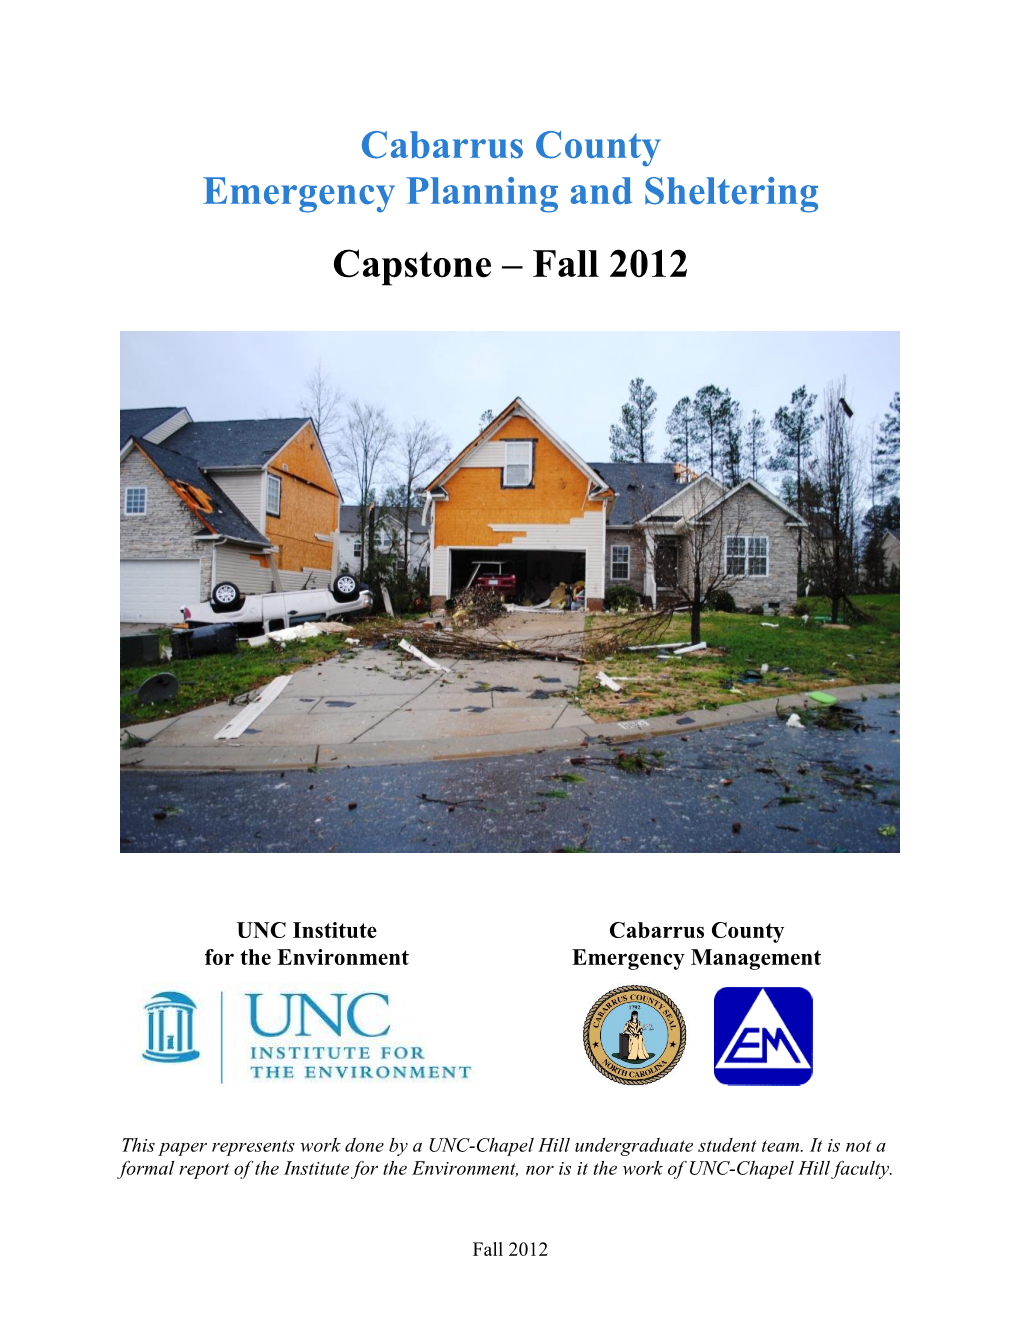 Cabarrus County Emergency Planning & Sheltering – Capstone